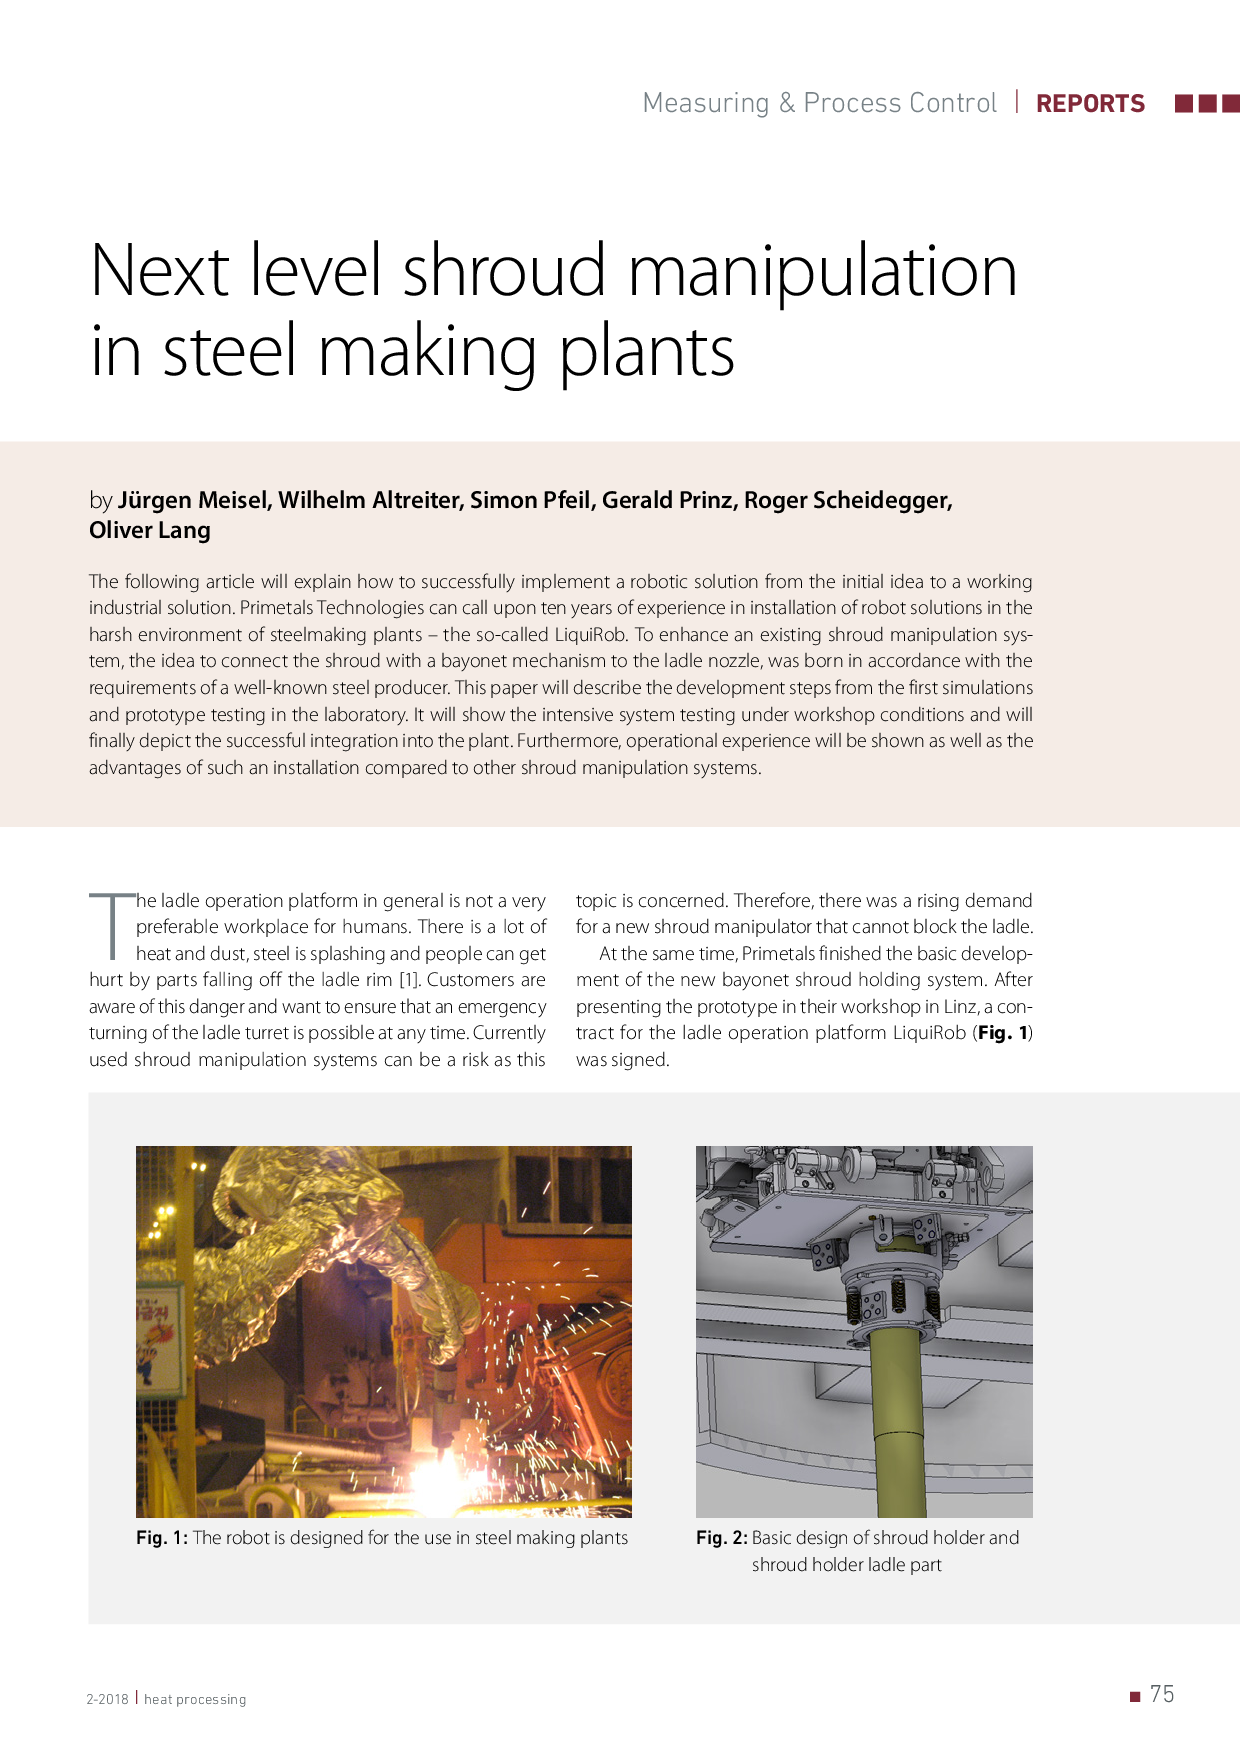 Next level shroud manipulation in steel making plants